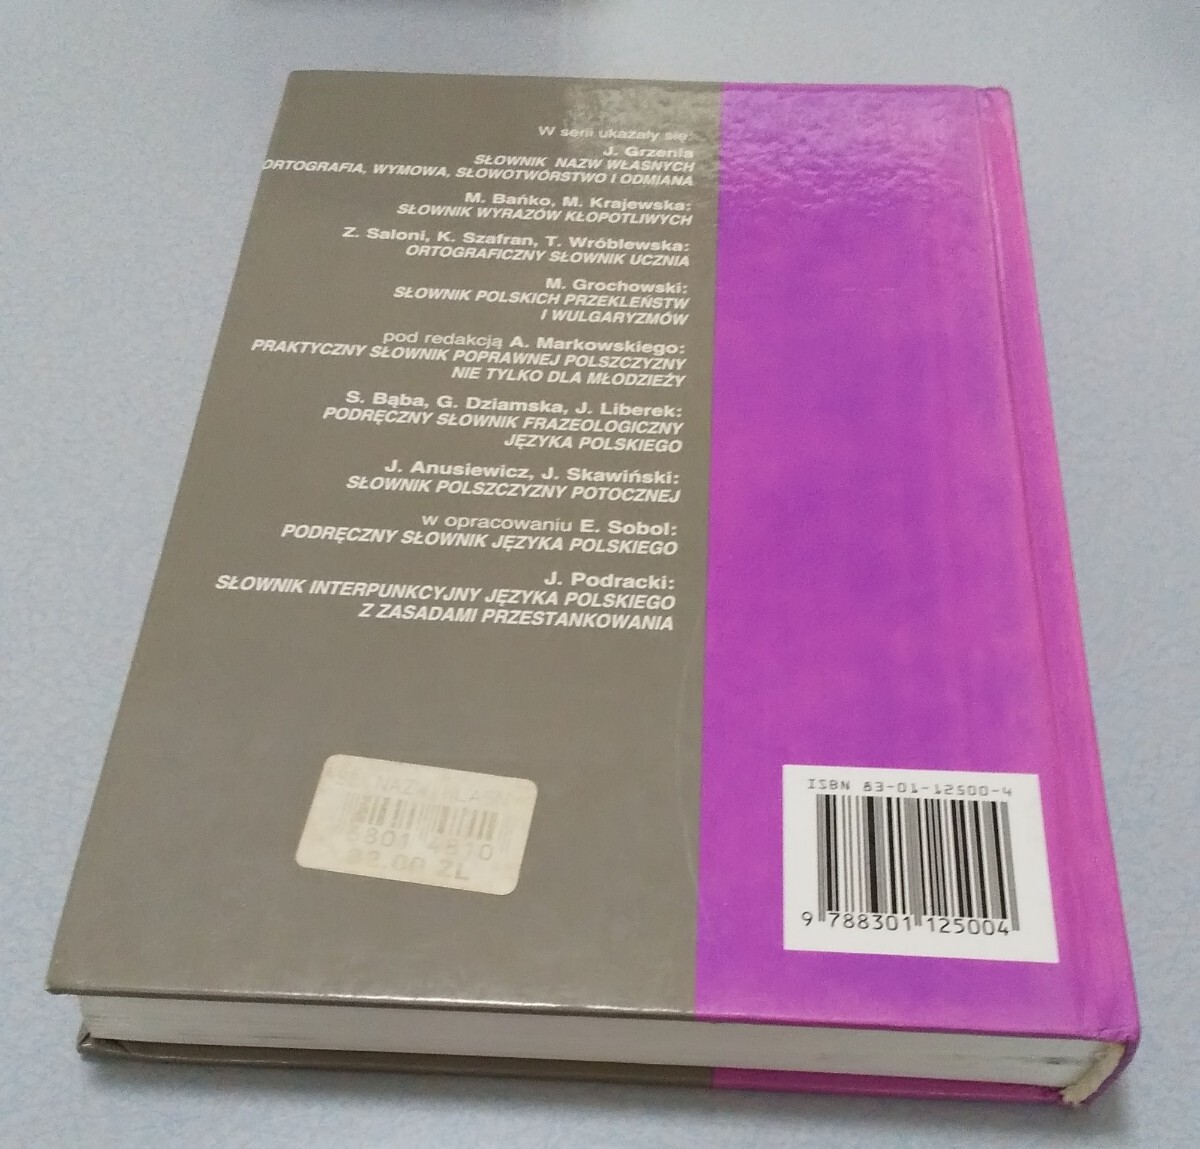 [. famous . dictionary ] Poland language dictionary [Slownik nazw wlasnych] Wydawnictwo naukowe PWN,1998 year 